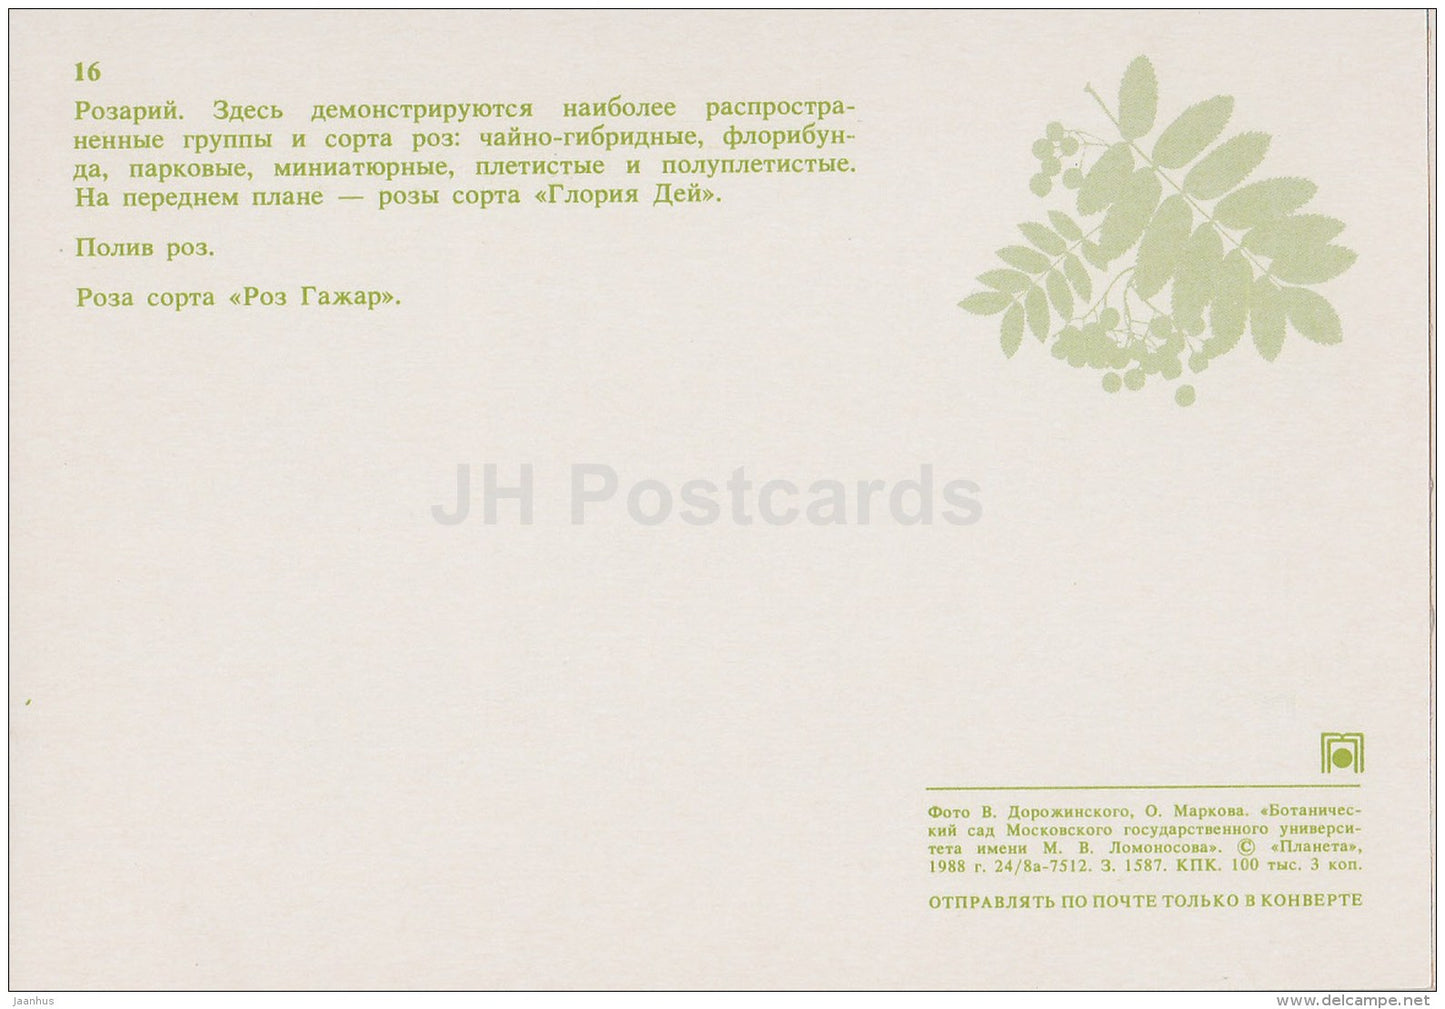 Rosarium - roses - Moscow Botanical Garden - 1988 - Russia USSR - unused - JH Postcards